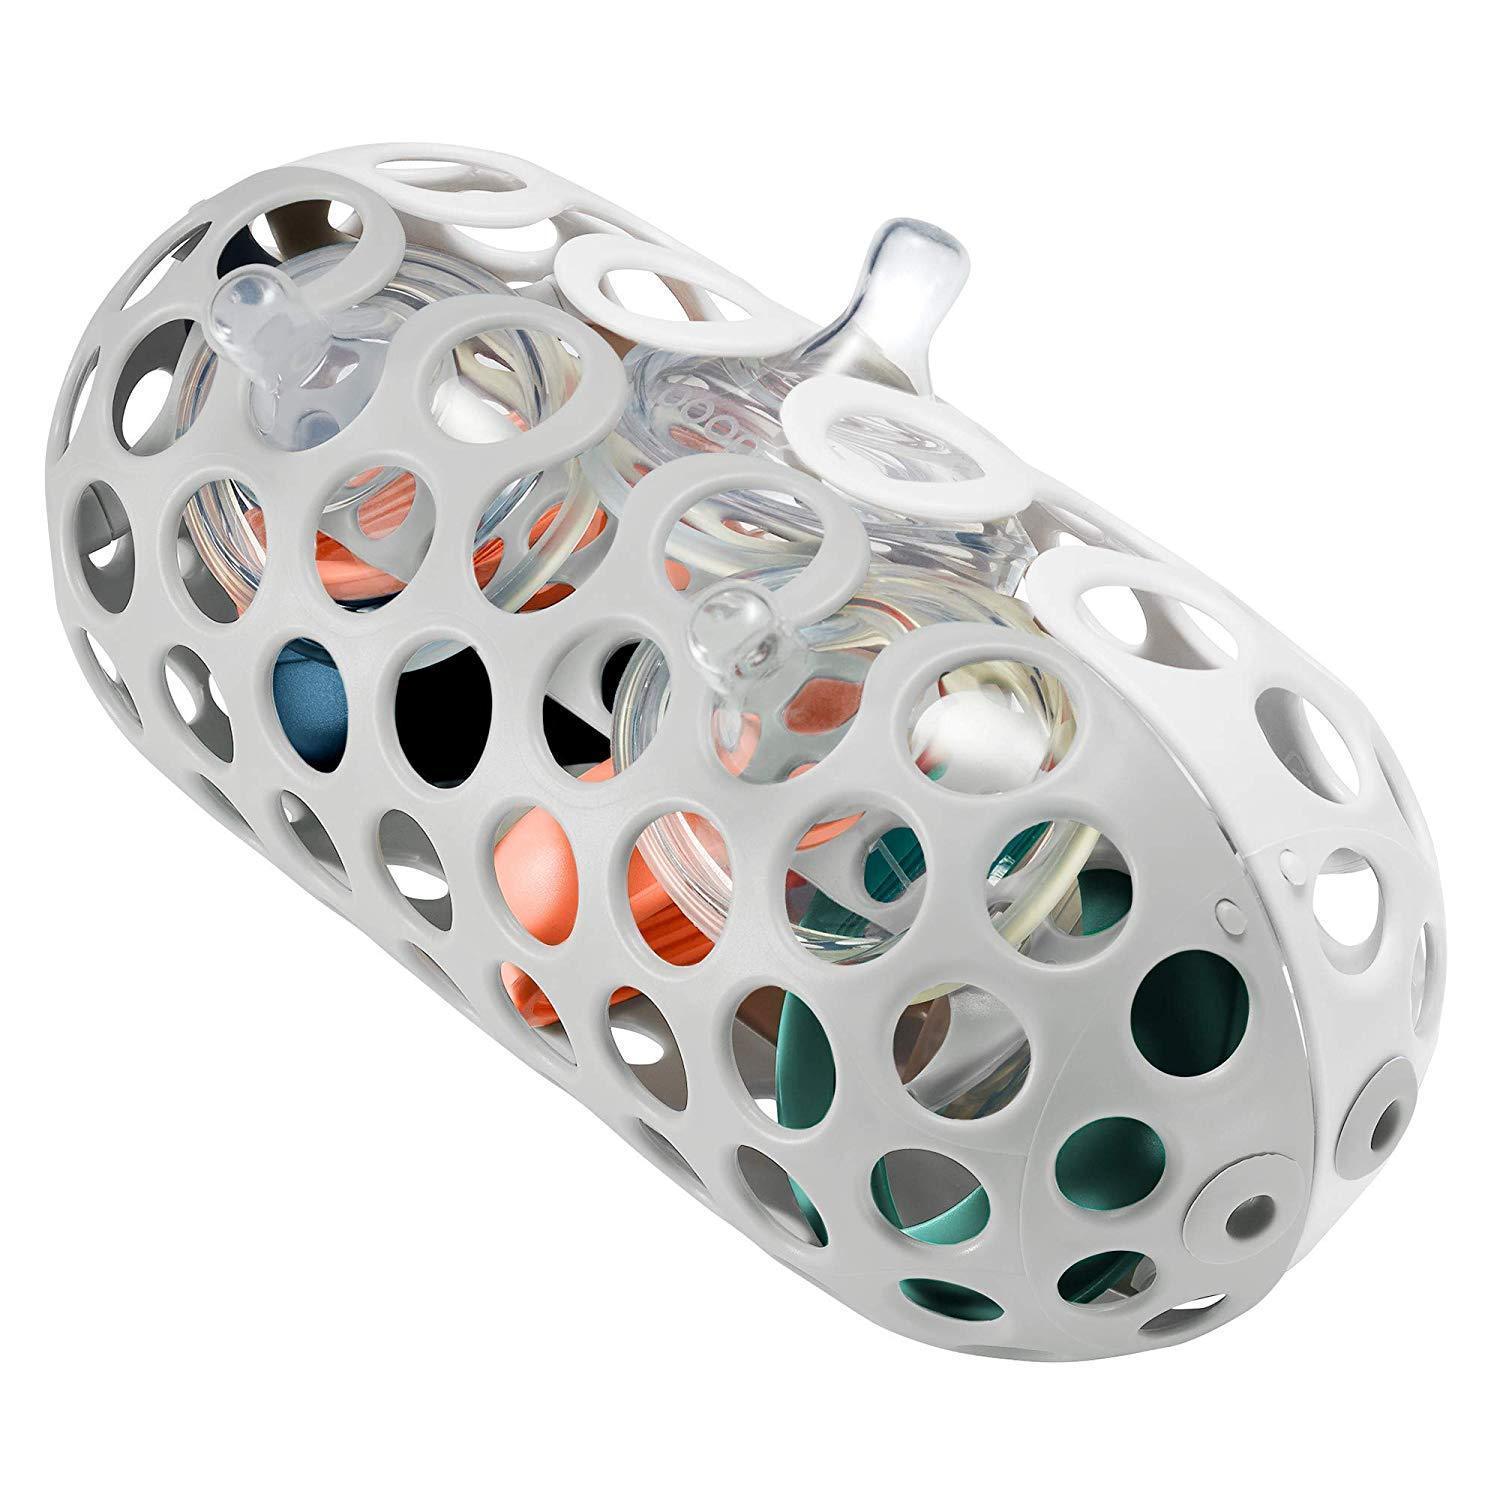 Boon Clutch Dishwasher Basket - Baby Bottle Parts Dishwasher